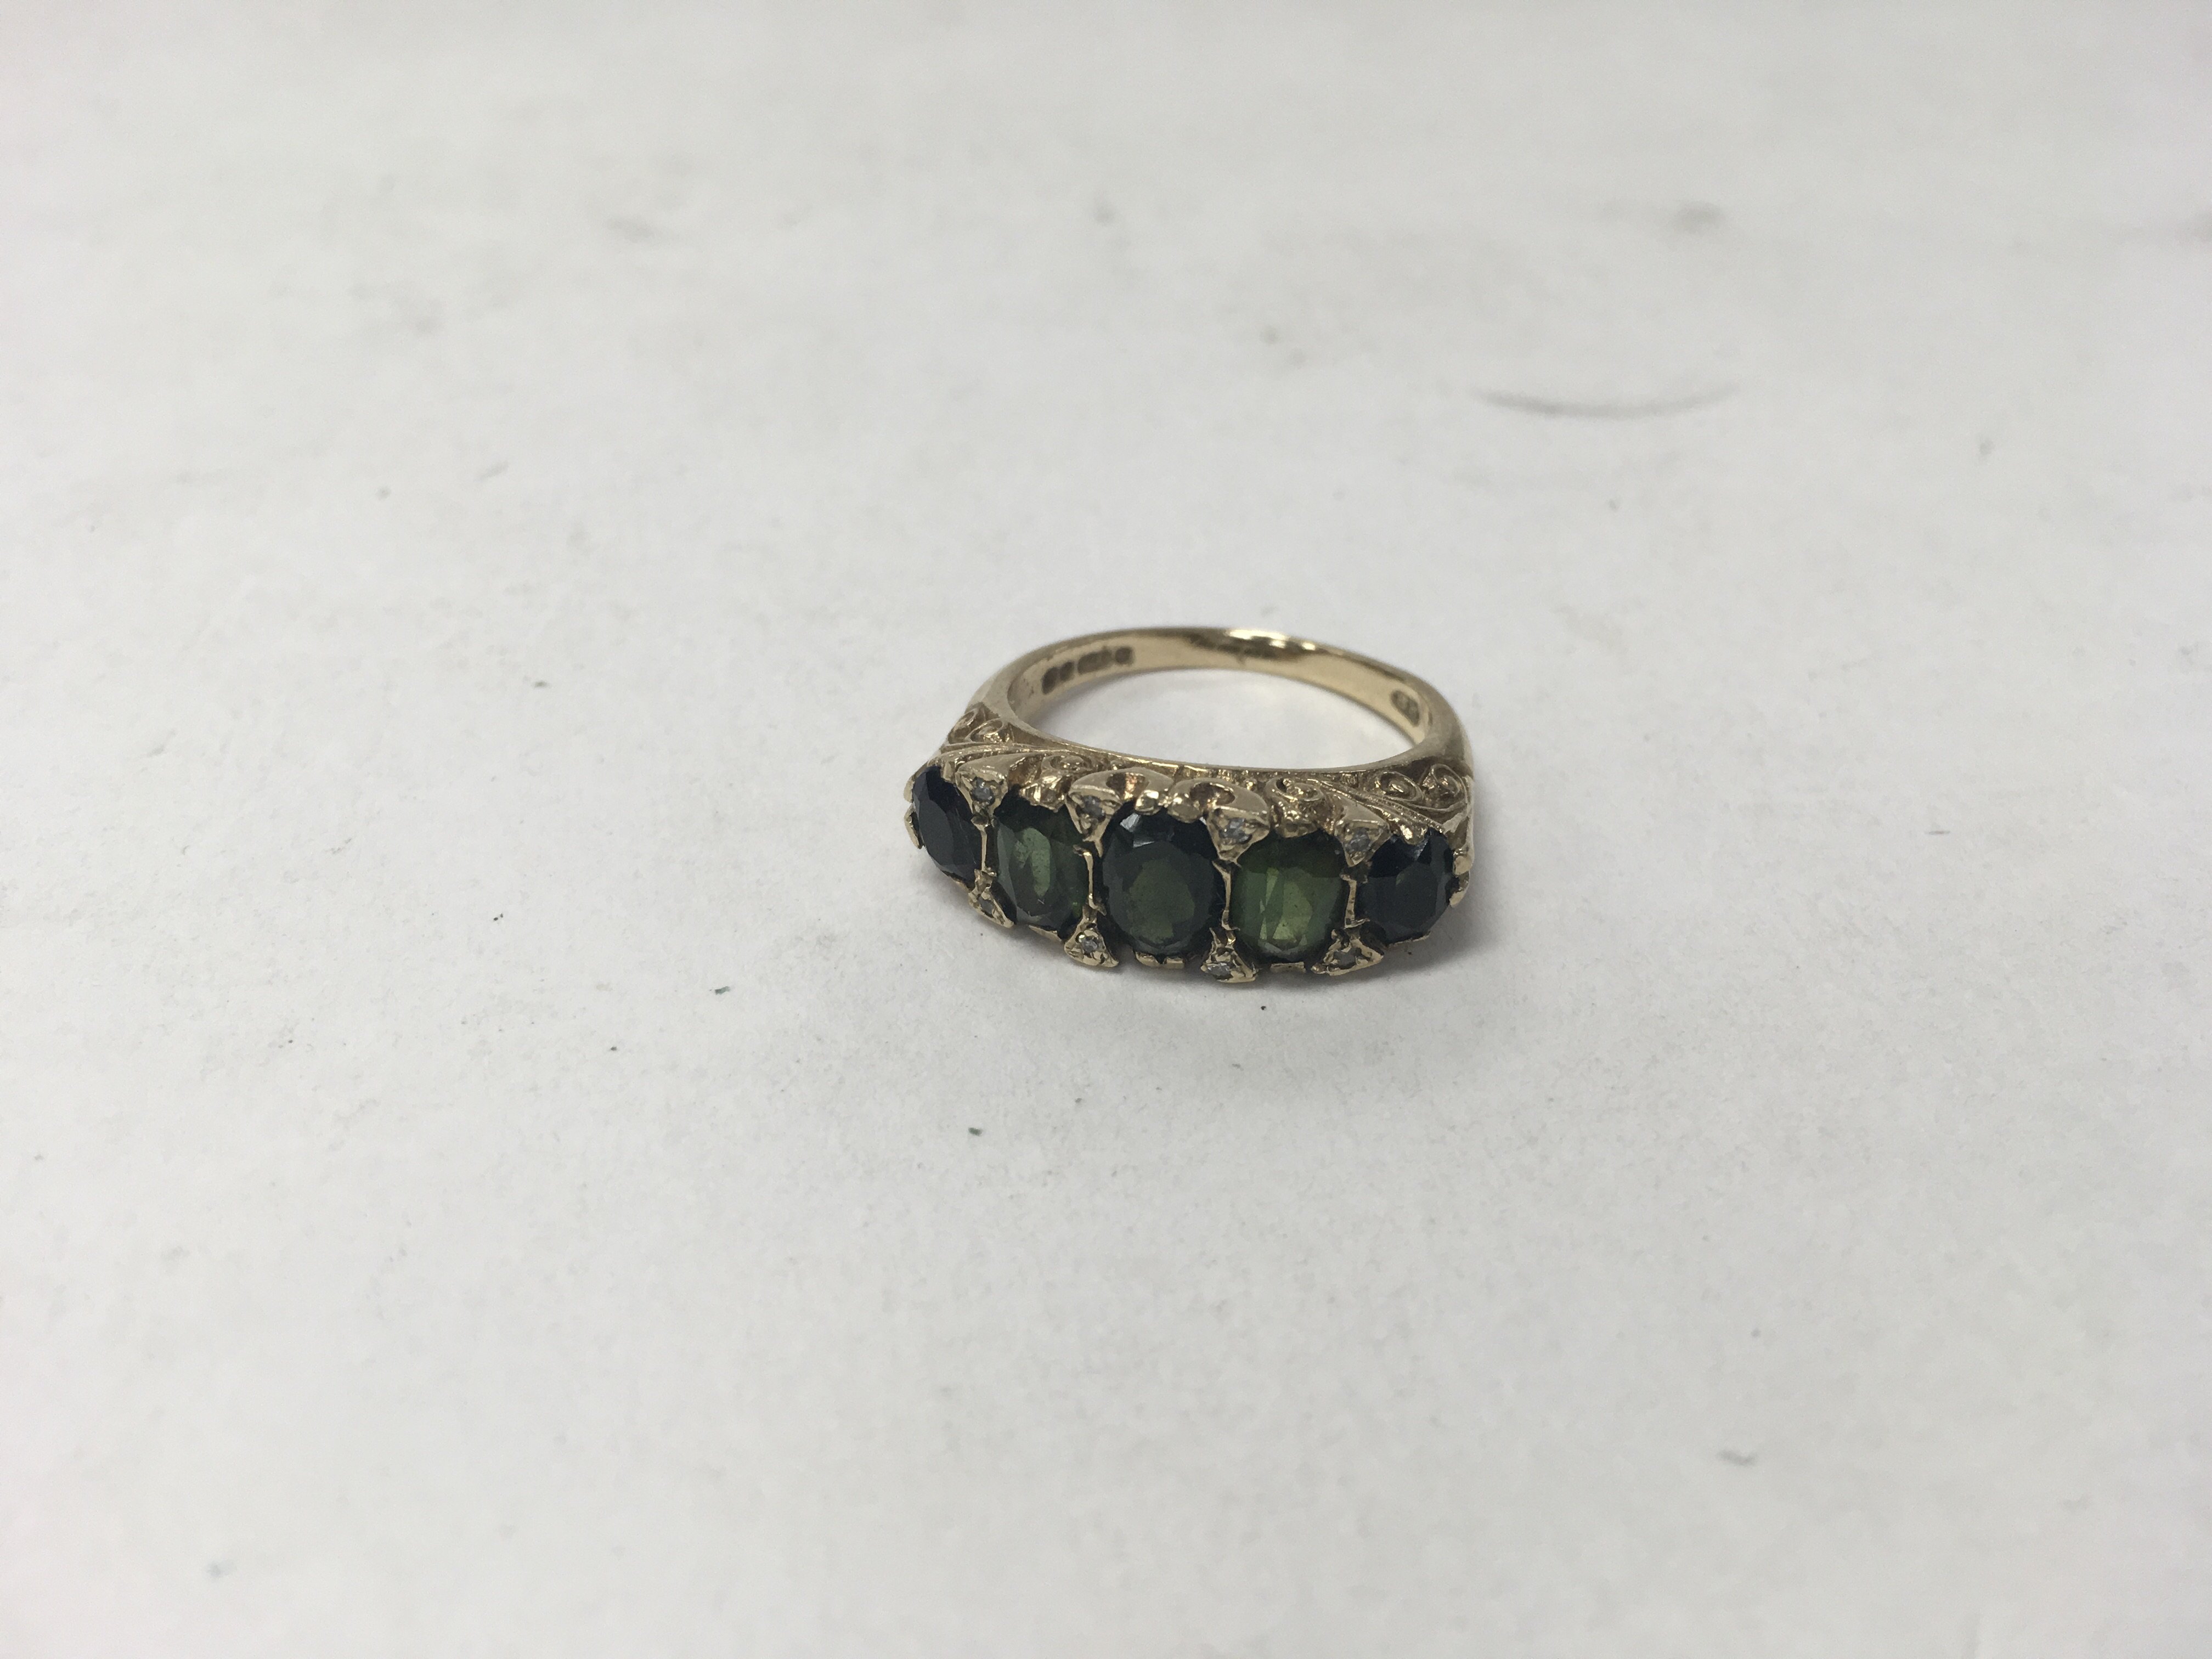 A 9ct gold green garnet ring. Weight approx 6g, si